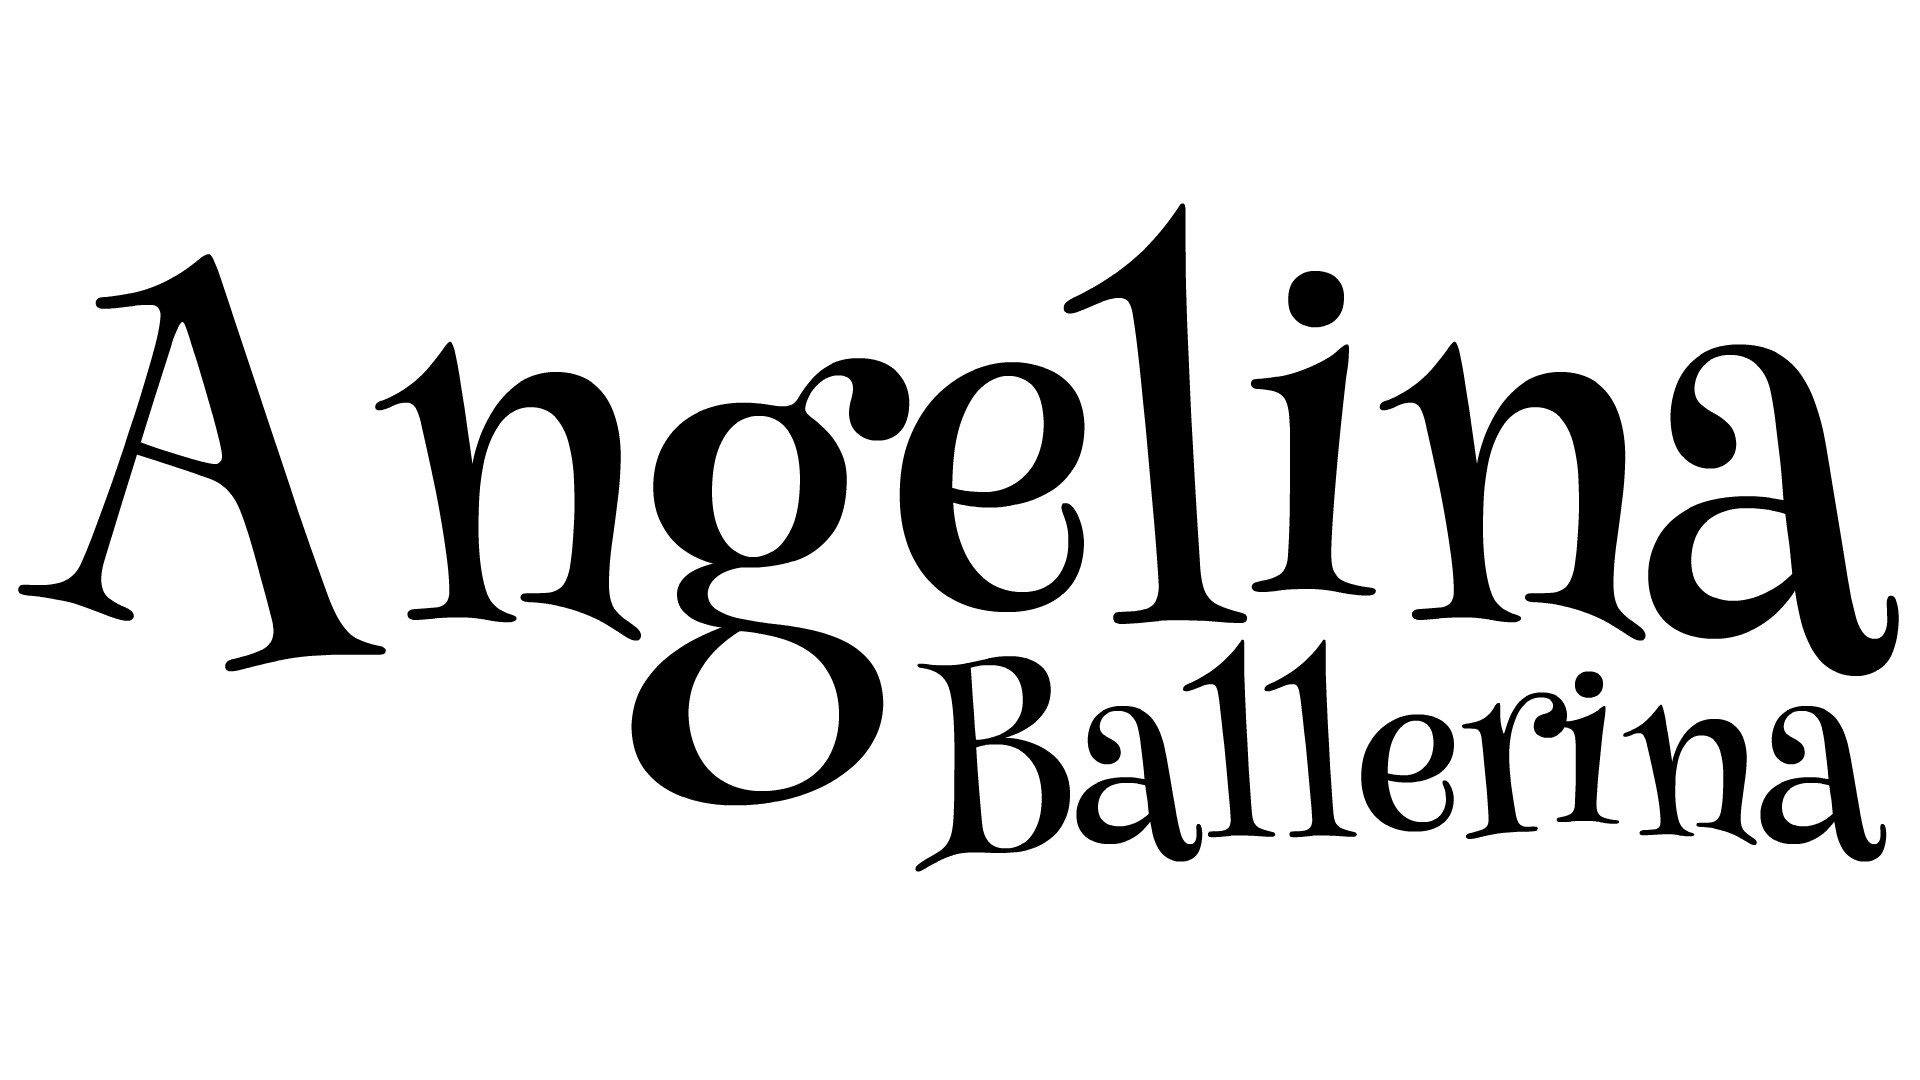 1920x1080 Best angelina ballerina wallpaper Â· 1920 x 1080 1 0